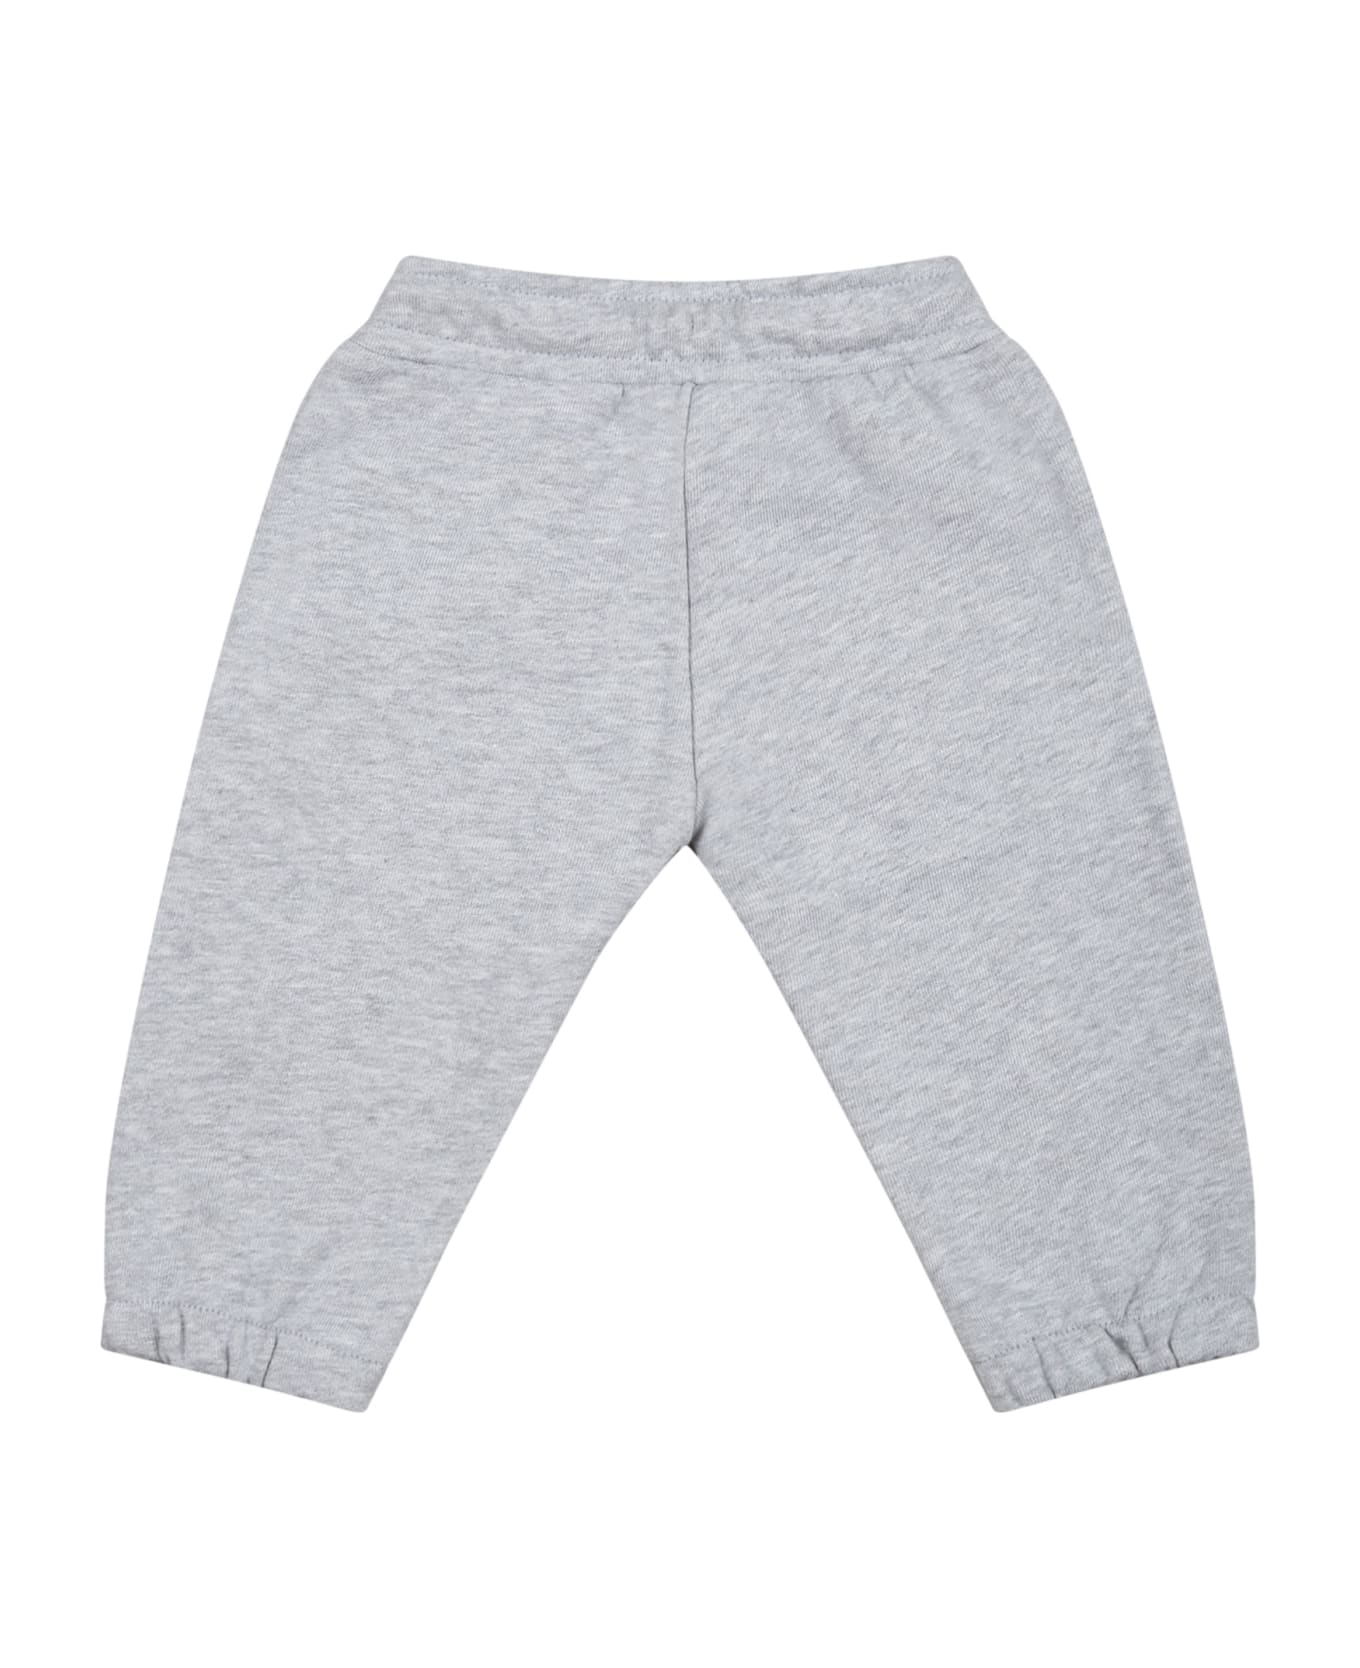 Kenzo Kids Grey Sweatpants For Babies With Logo - Grey